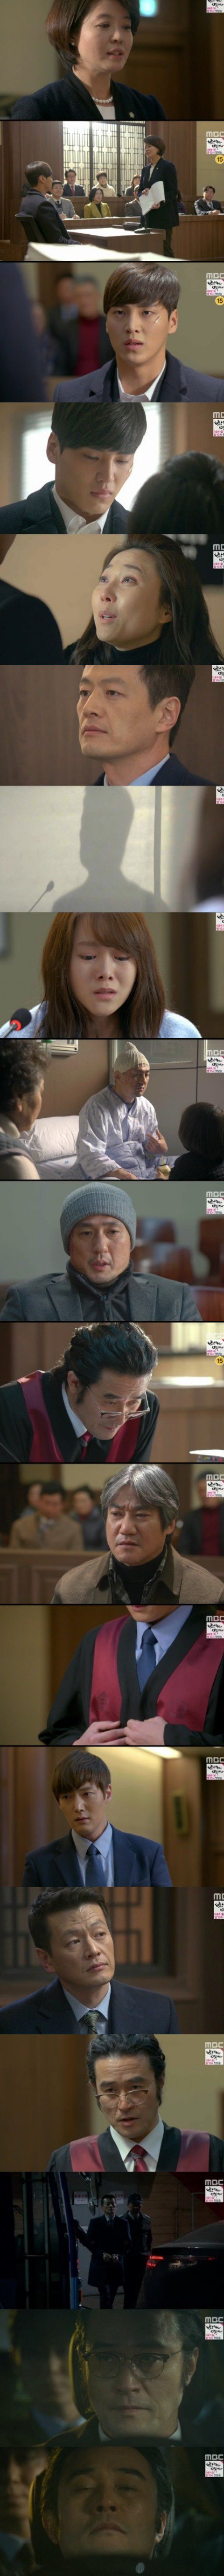 episode 21 captures for the Korean drama 'Pride and Prejudice'